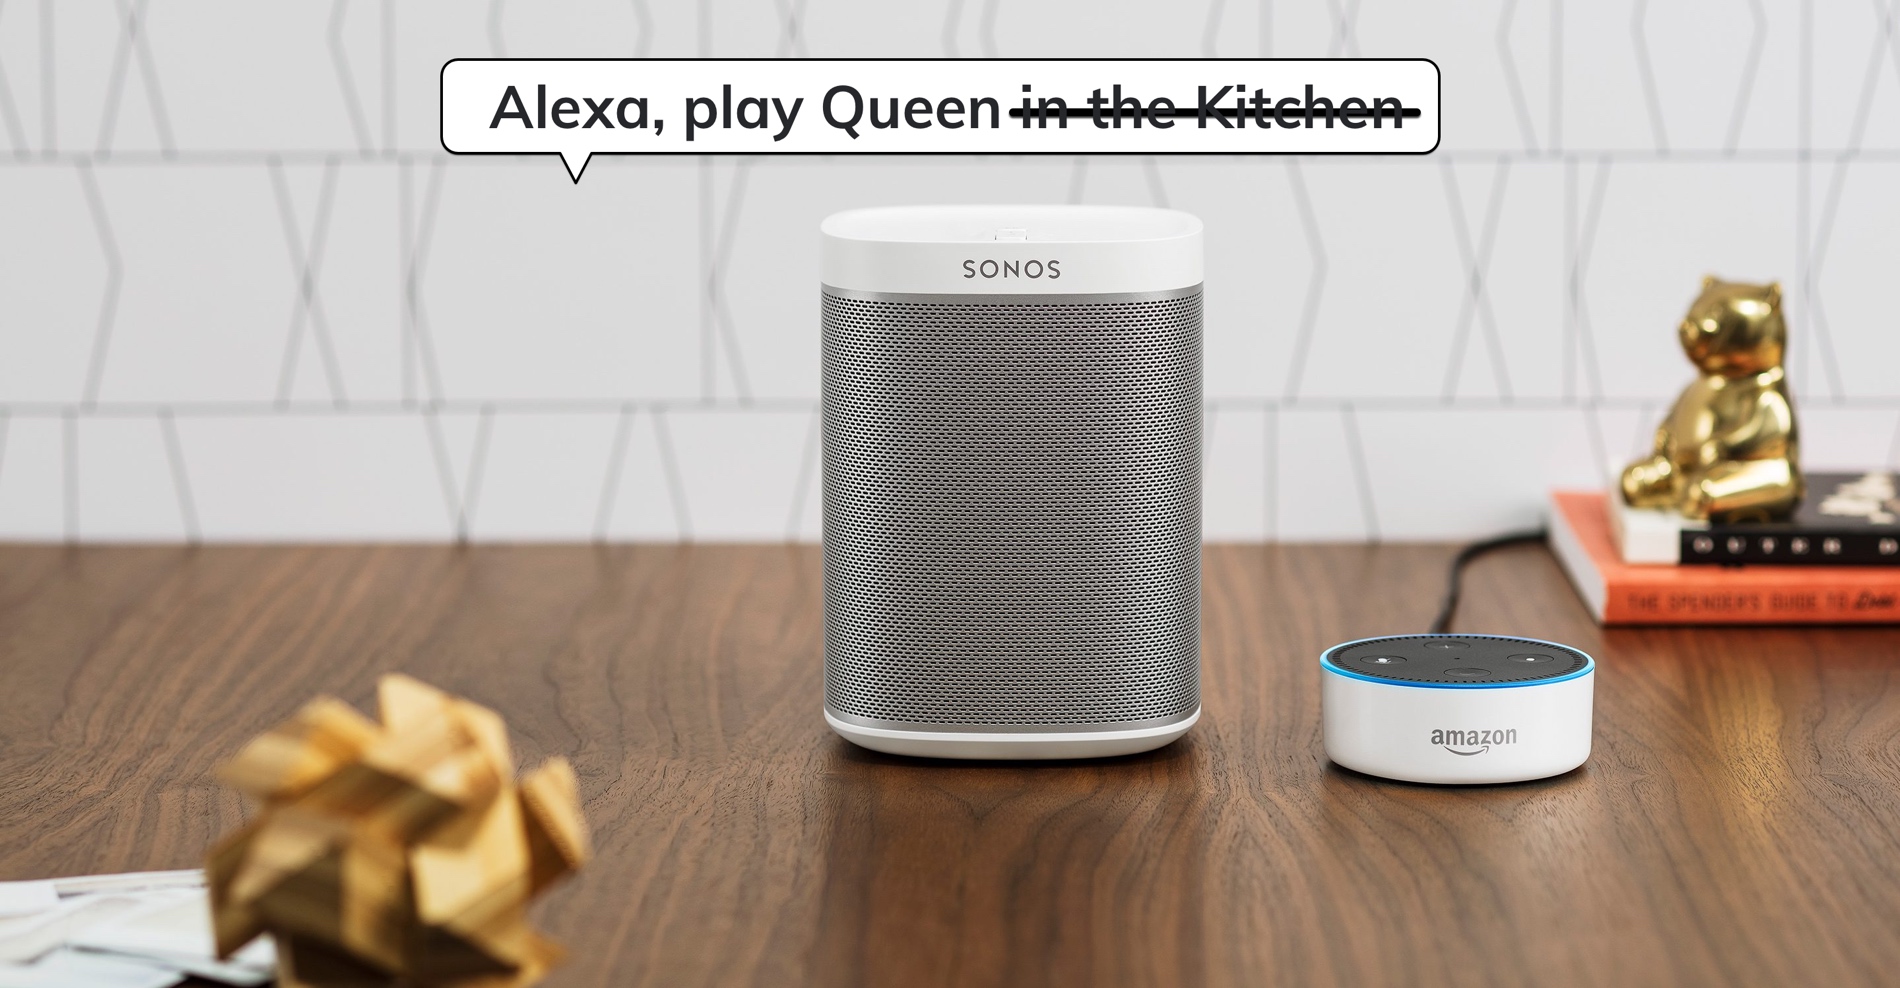 grådig Snestorm belastning Has your Alexa Lost Her Voice? How To Fix Alexa on Sonos